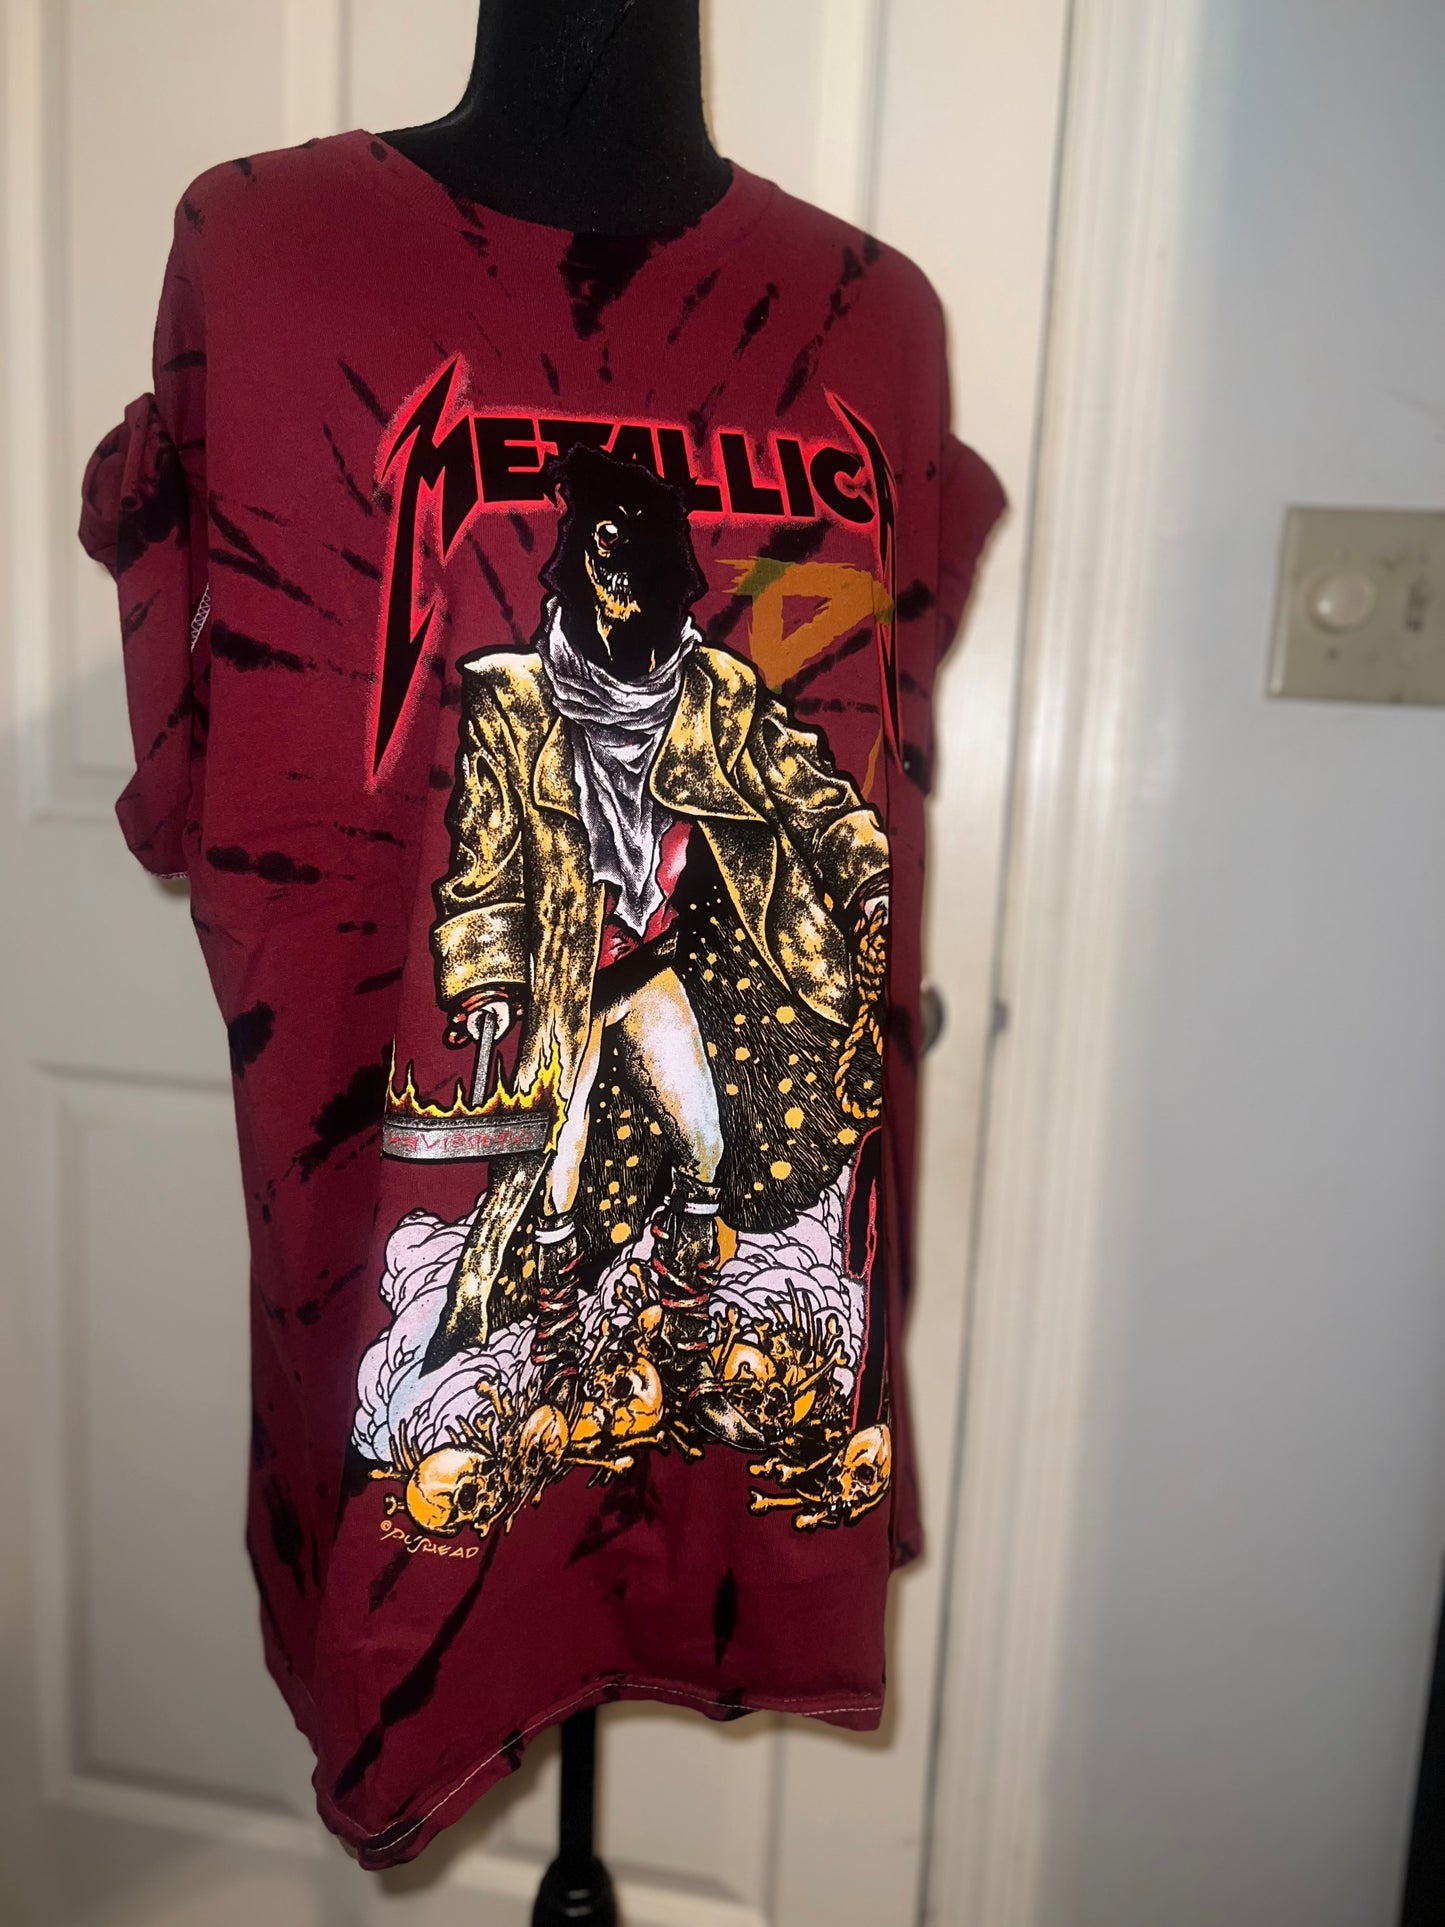 Metallica Tie Dye Double Sided Oversized Tee